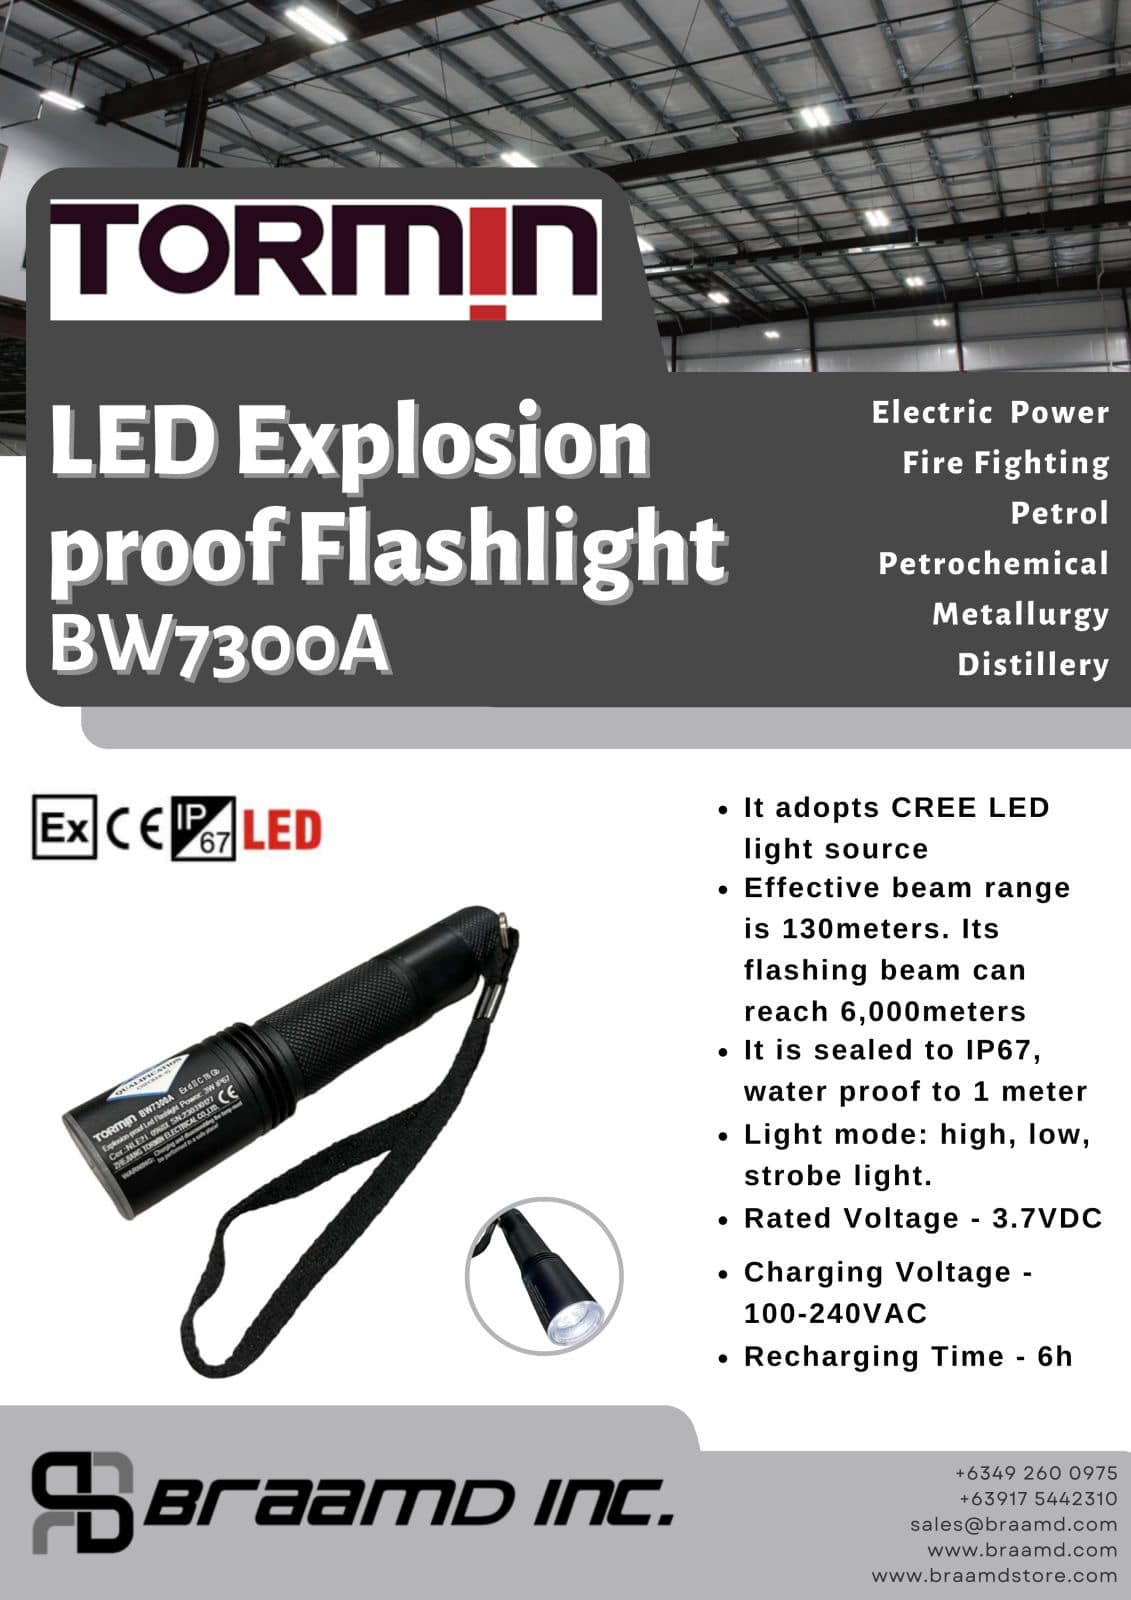 TORMIN LED Explosion proof Flashflight